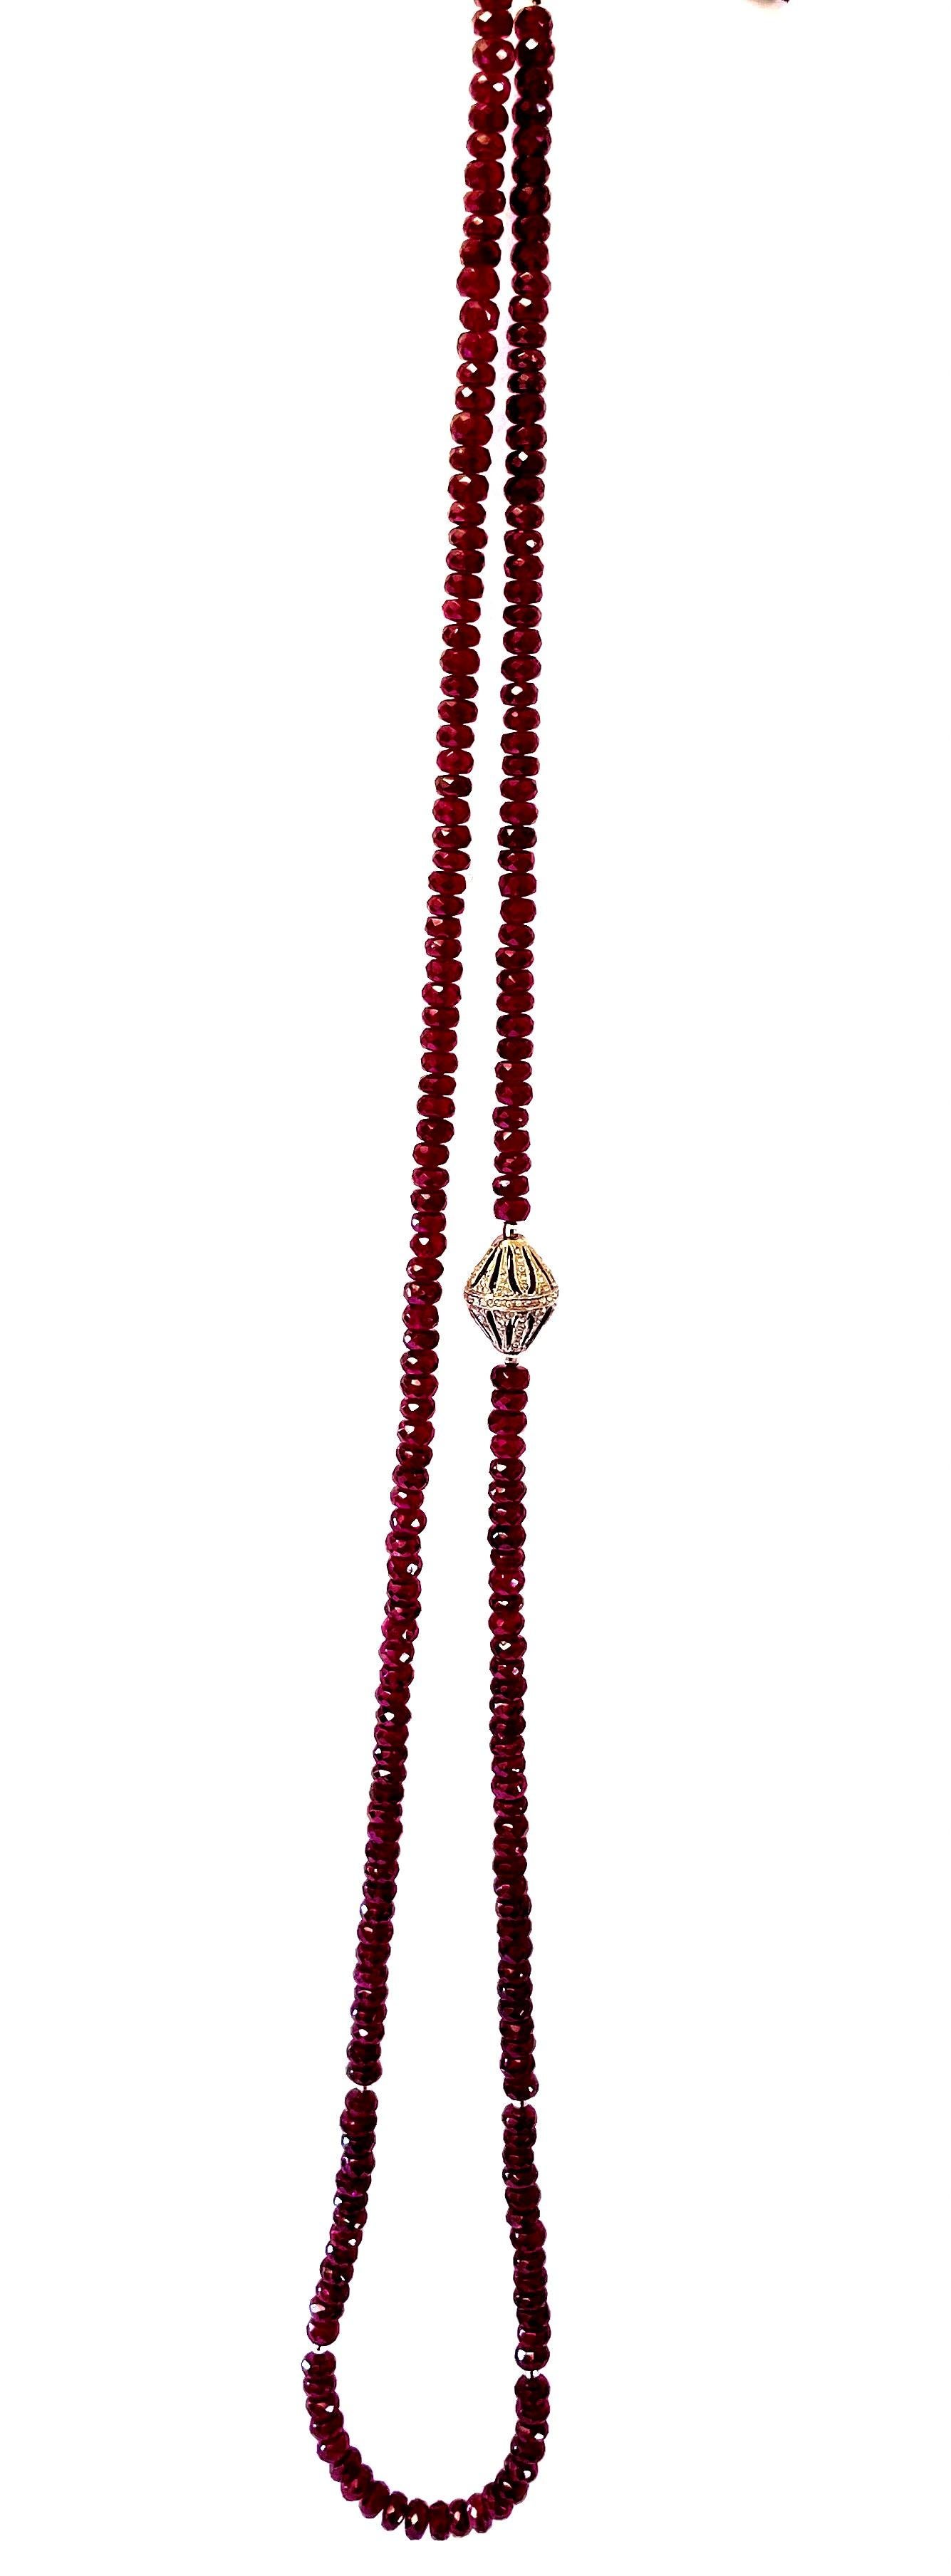 garnet beads necklace